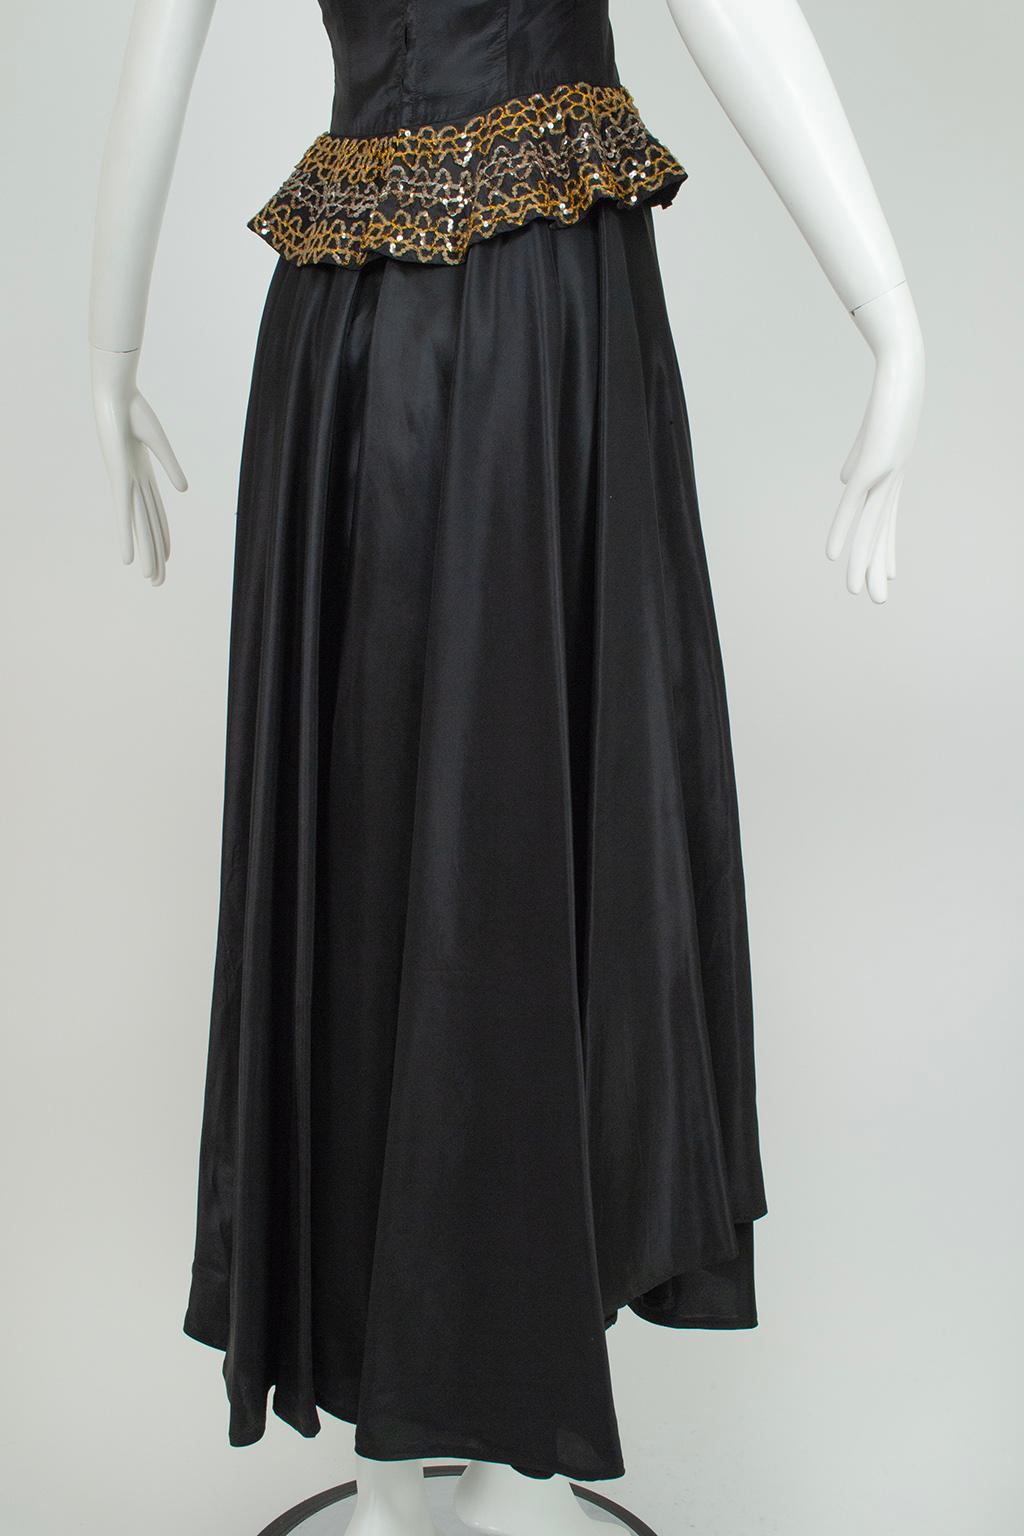 Black Taffeta Off-Shoulder Flamenco Gown with Sequin Peplum - XXS, 1940s For Sale 6